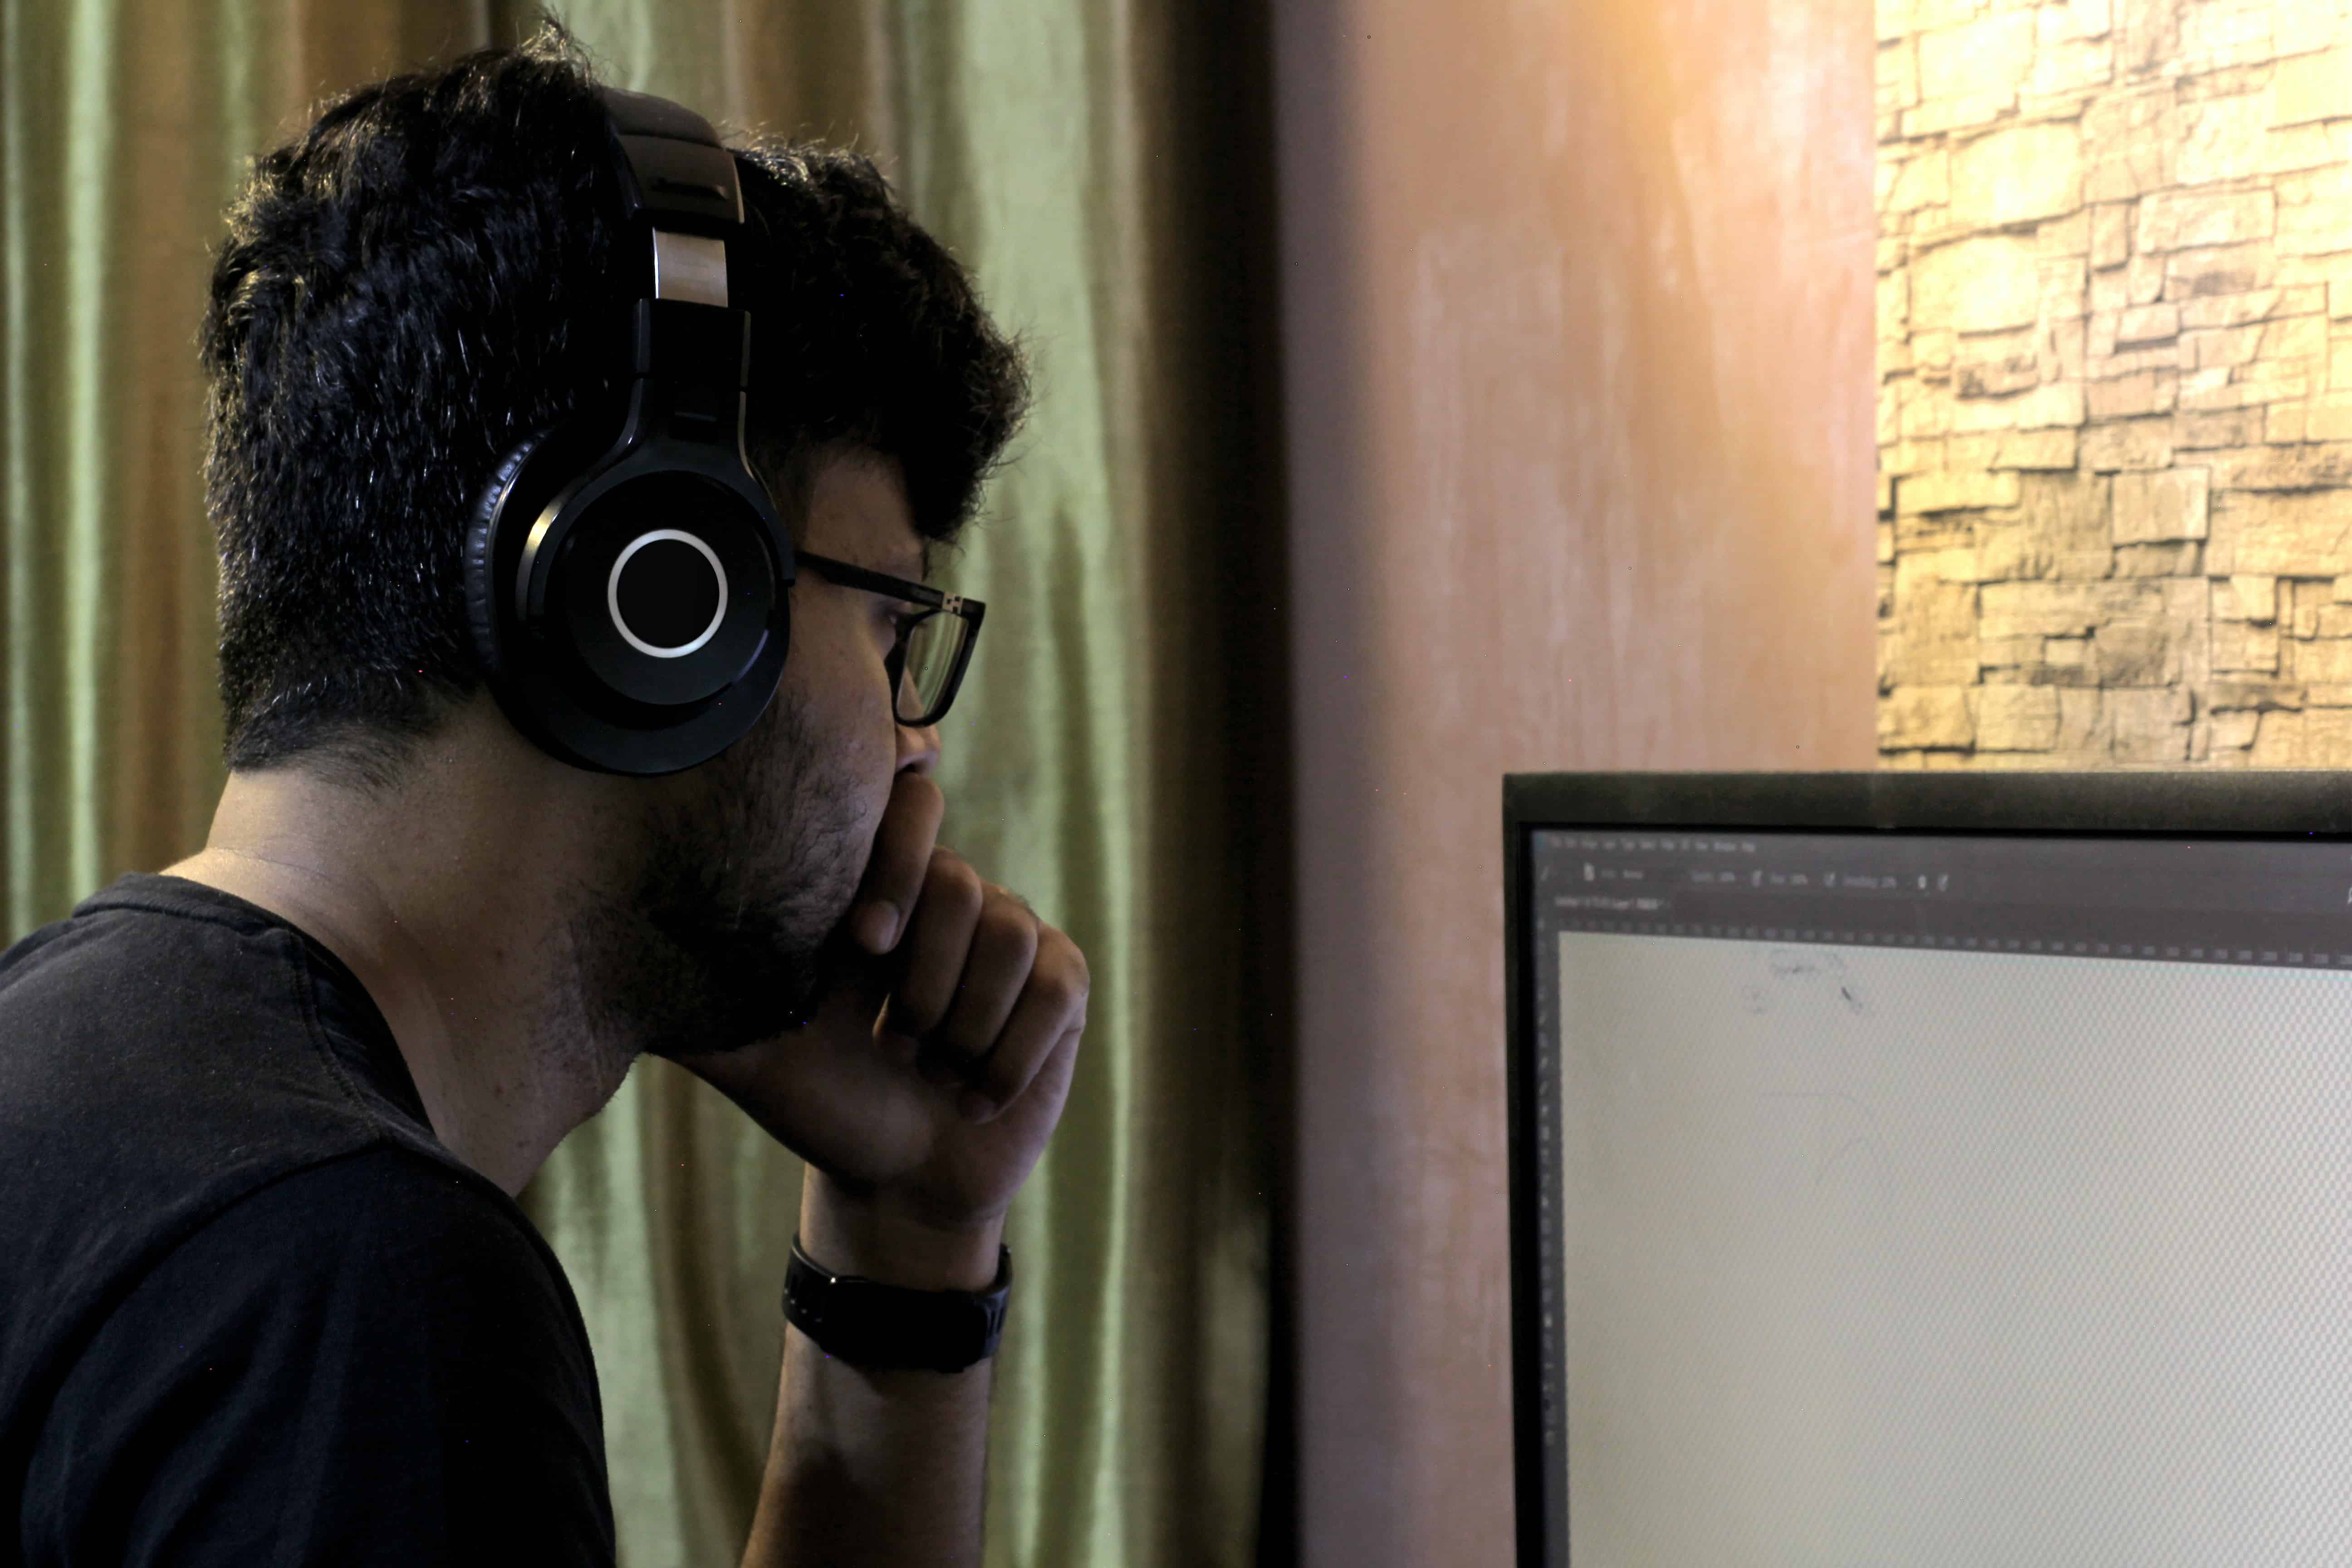 man wearing headphones looking at the screen